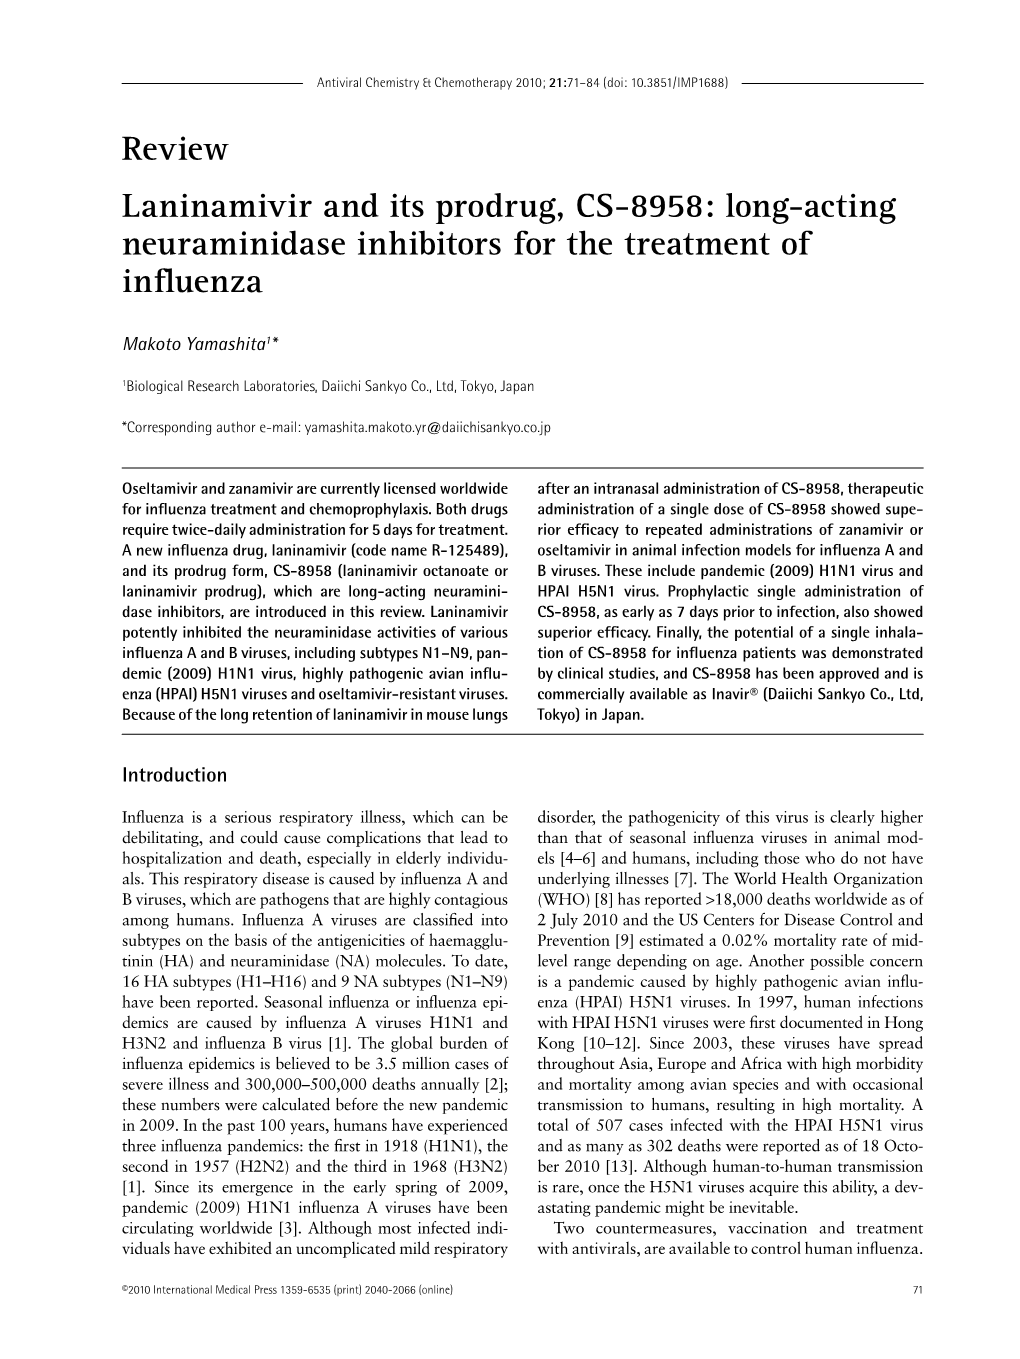 Review Laninamivir and Its Prodrug, CS-8958: Long-Acting Neuraminidase Inhibitors for the Treatment of Influenza